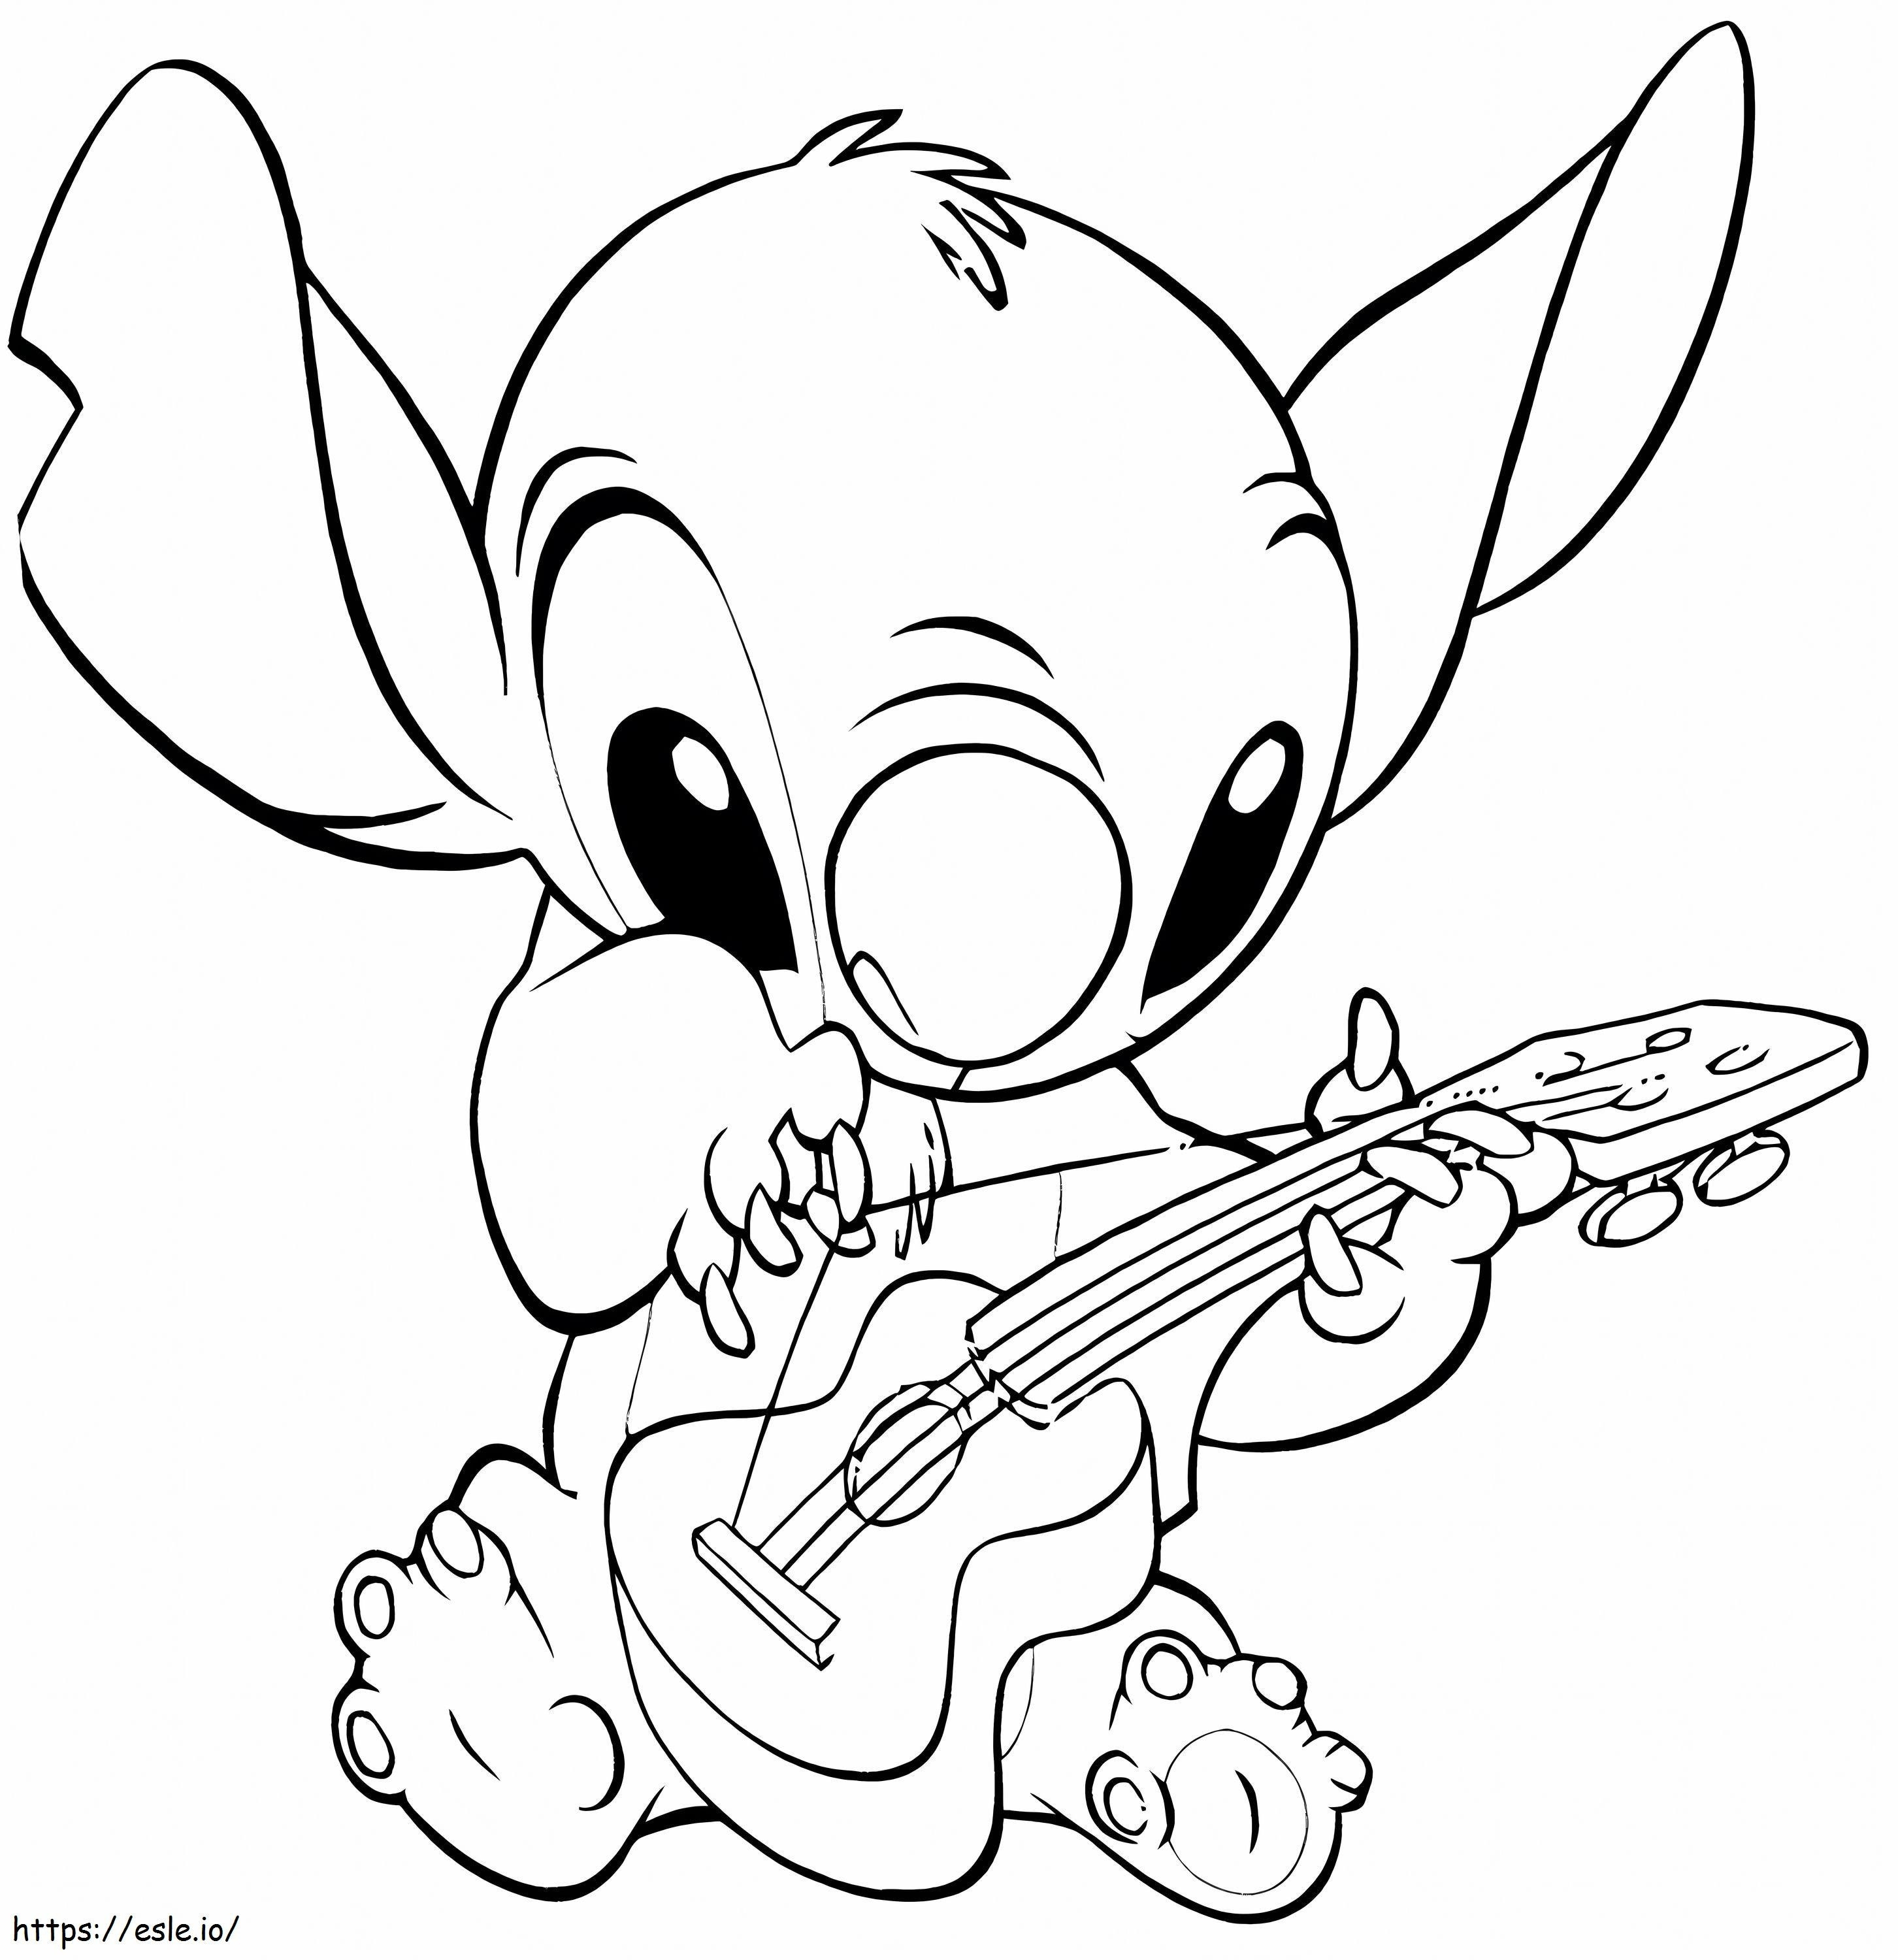 Stitch de Disney tocando la guitarra para colorear